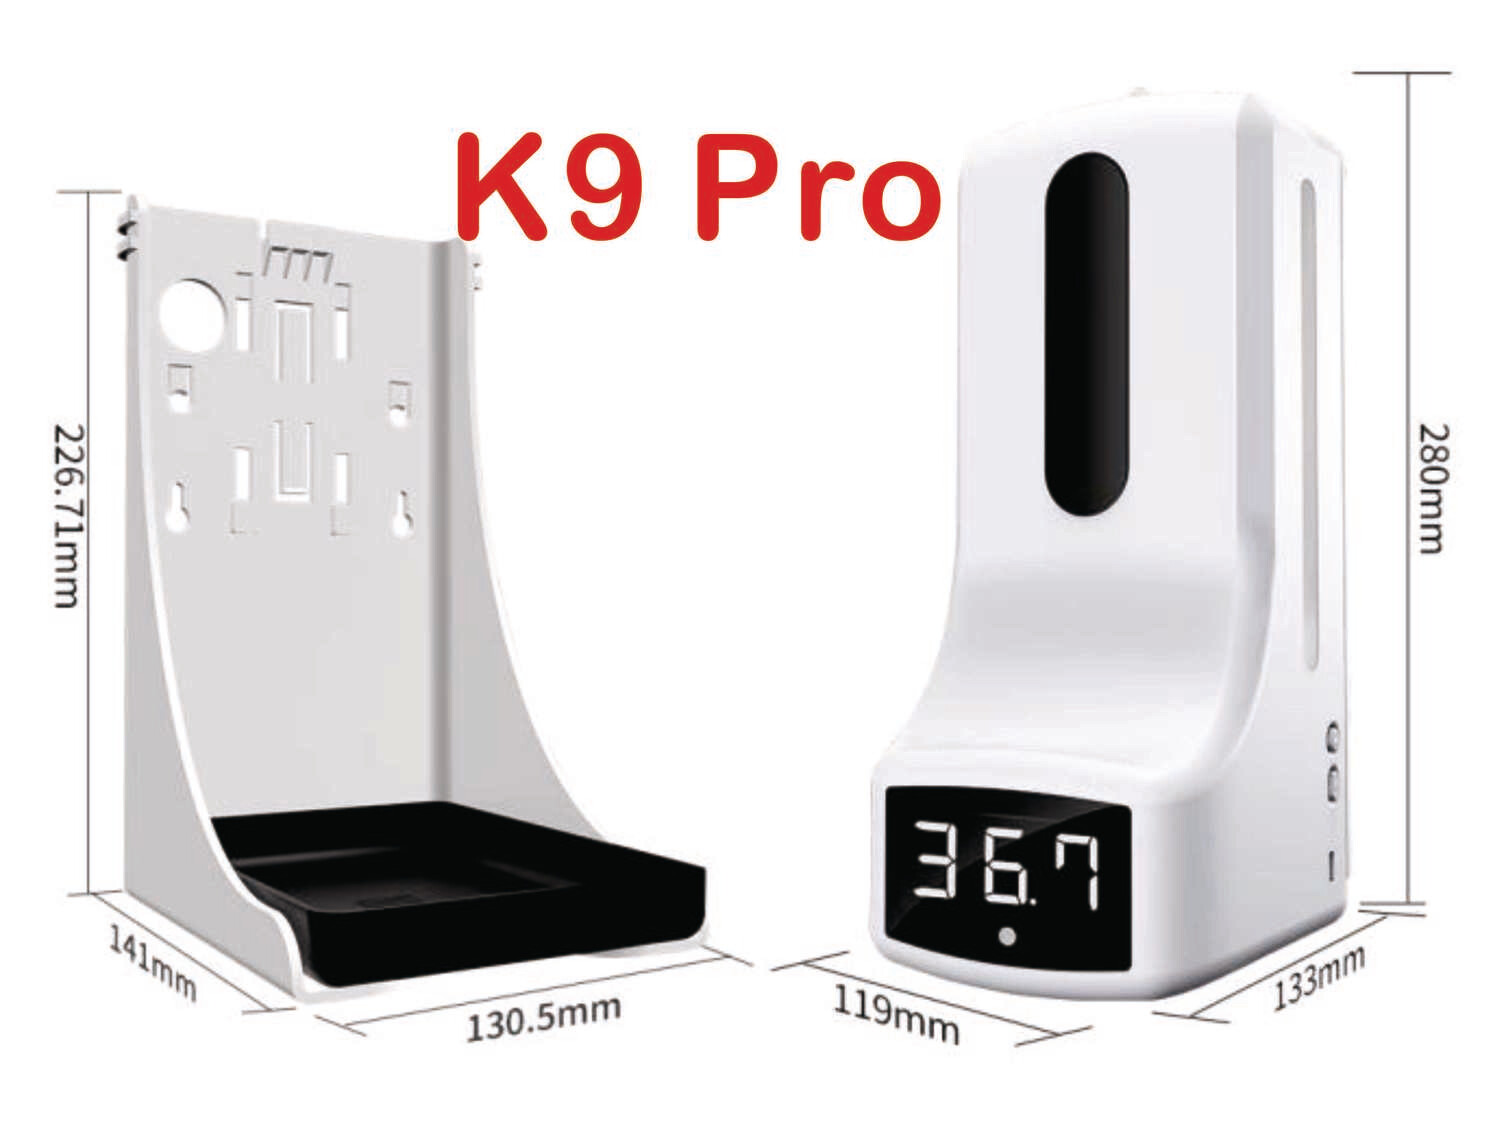 K9 Pro 2 in 1 Infrared Thermometer & Hand Sanitizer Dispenser